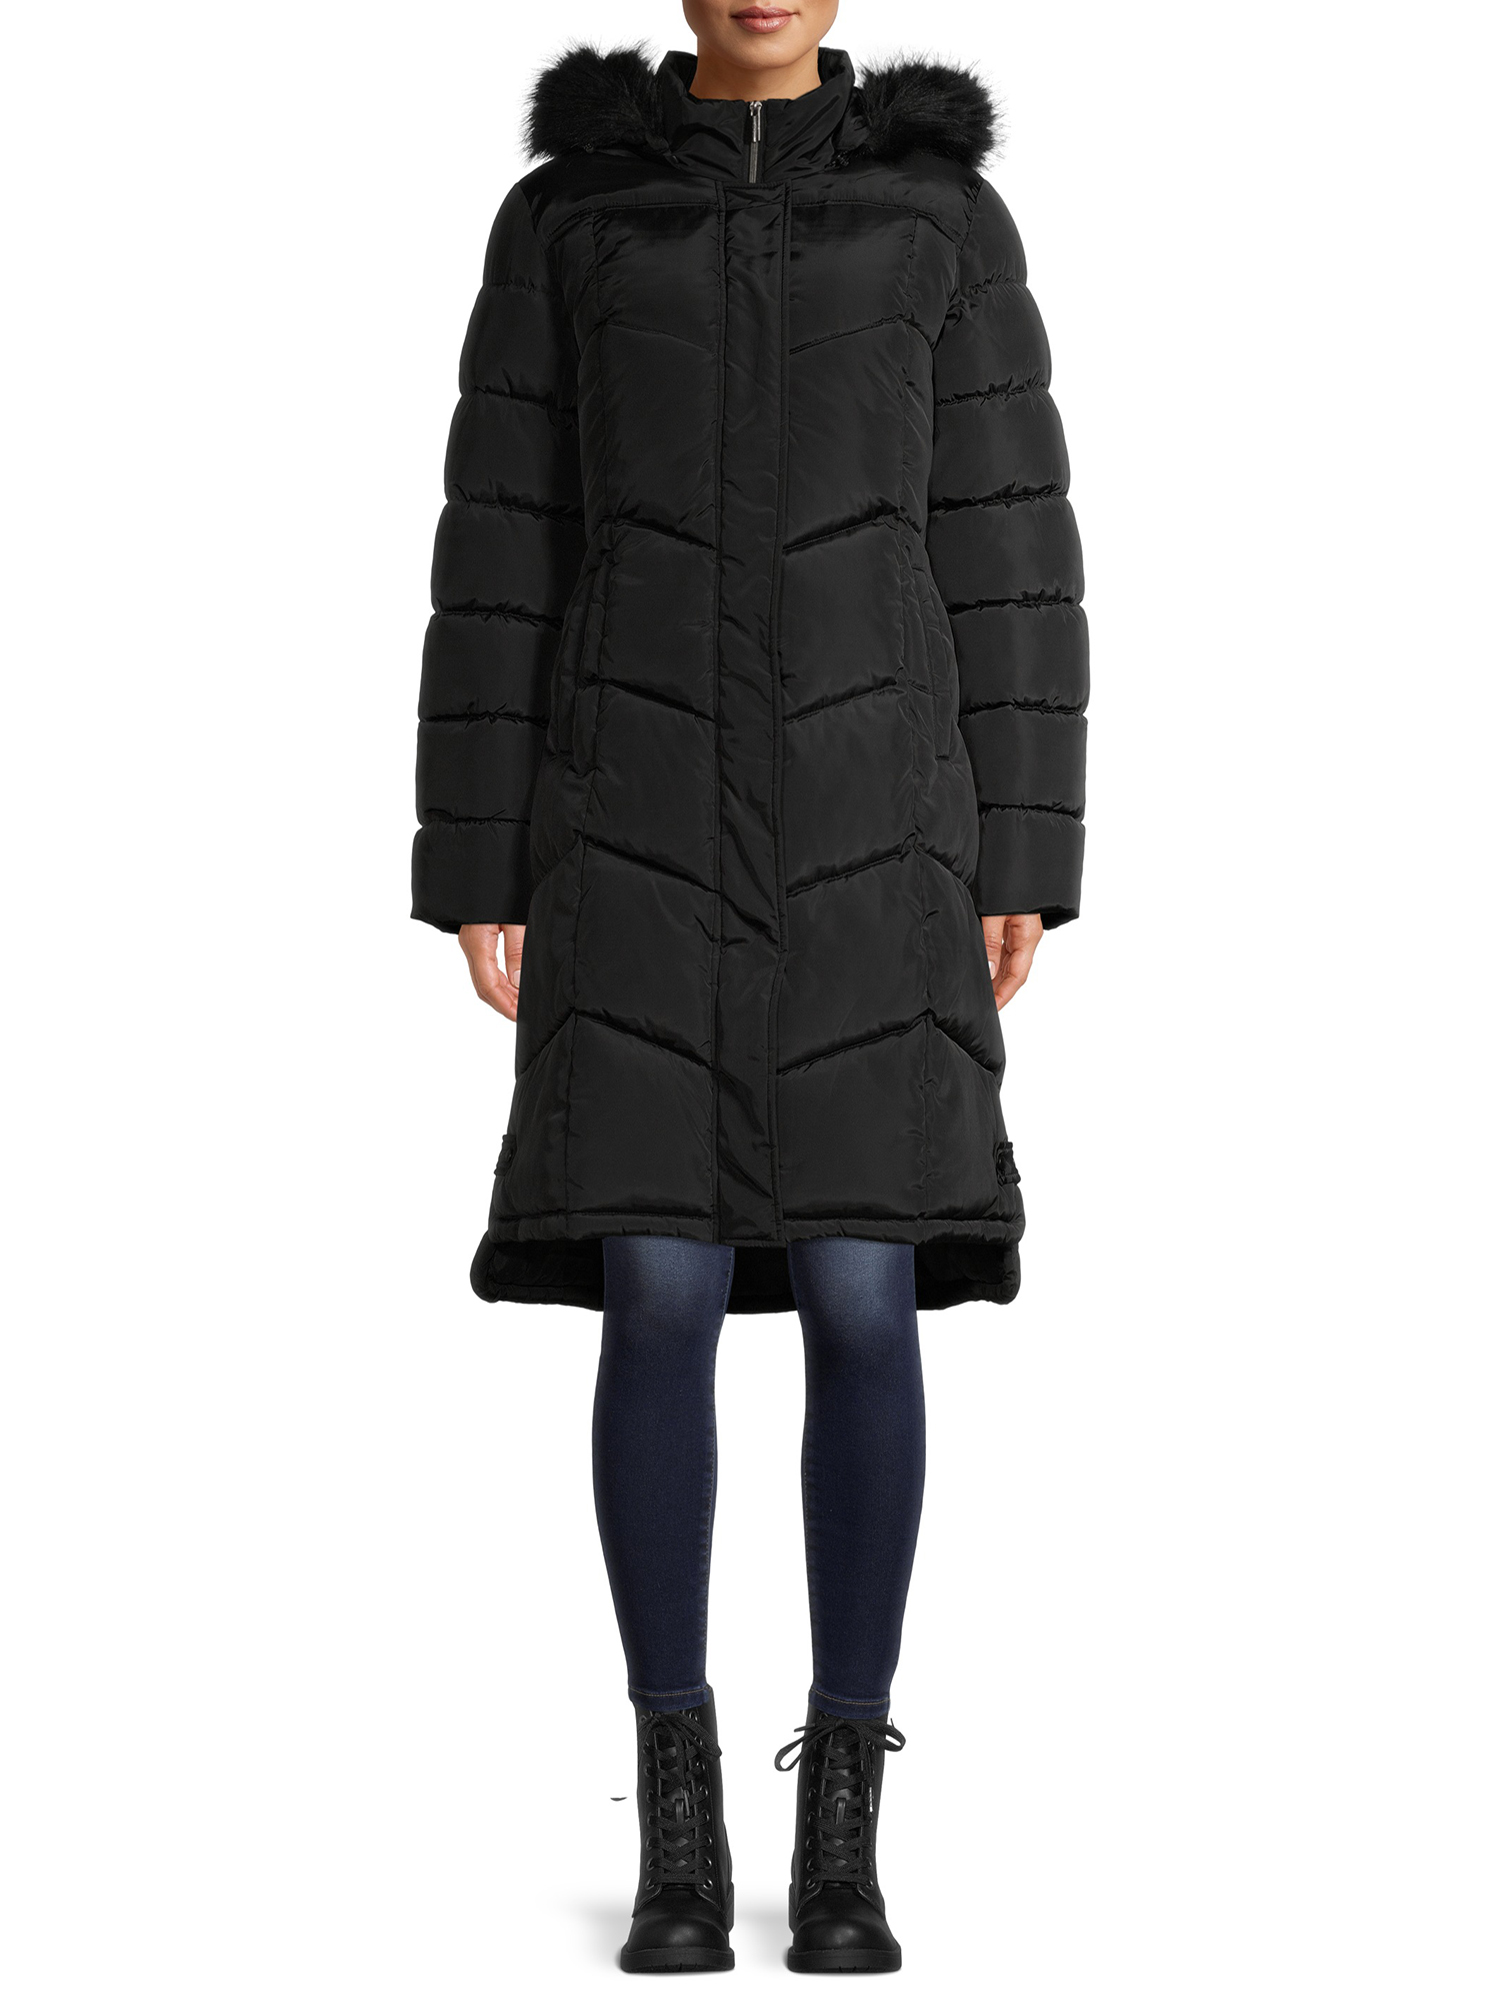 Big Chill Women's Maxi Chevron Puffer Coat with Faux Fur Trim Hood - image 1 of 6